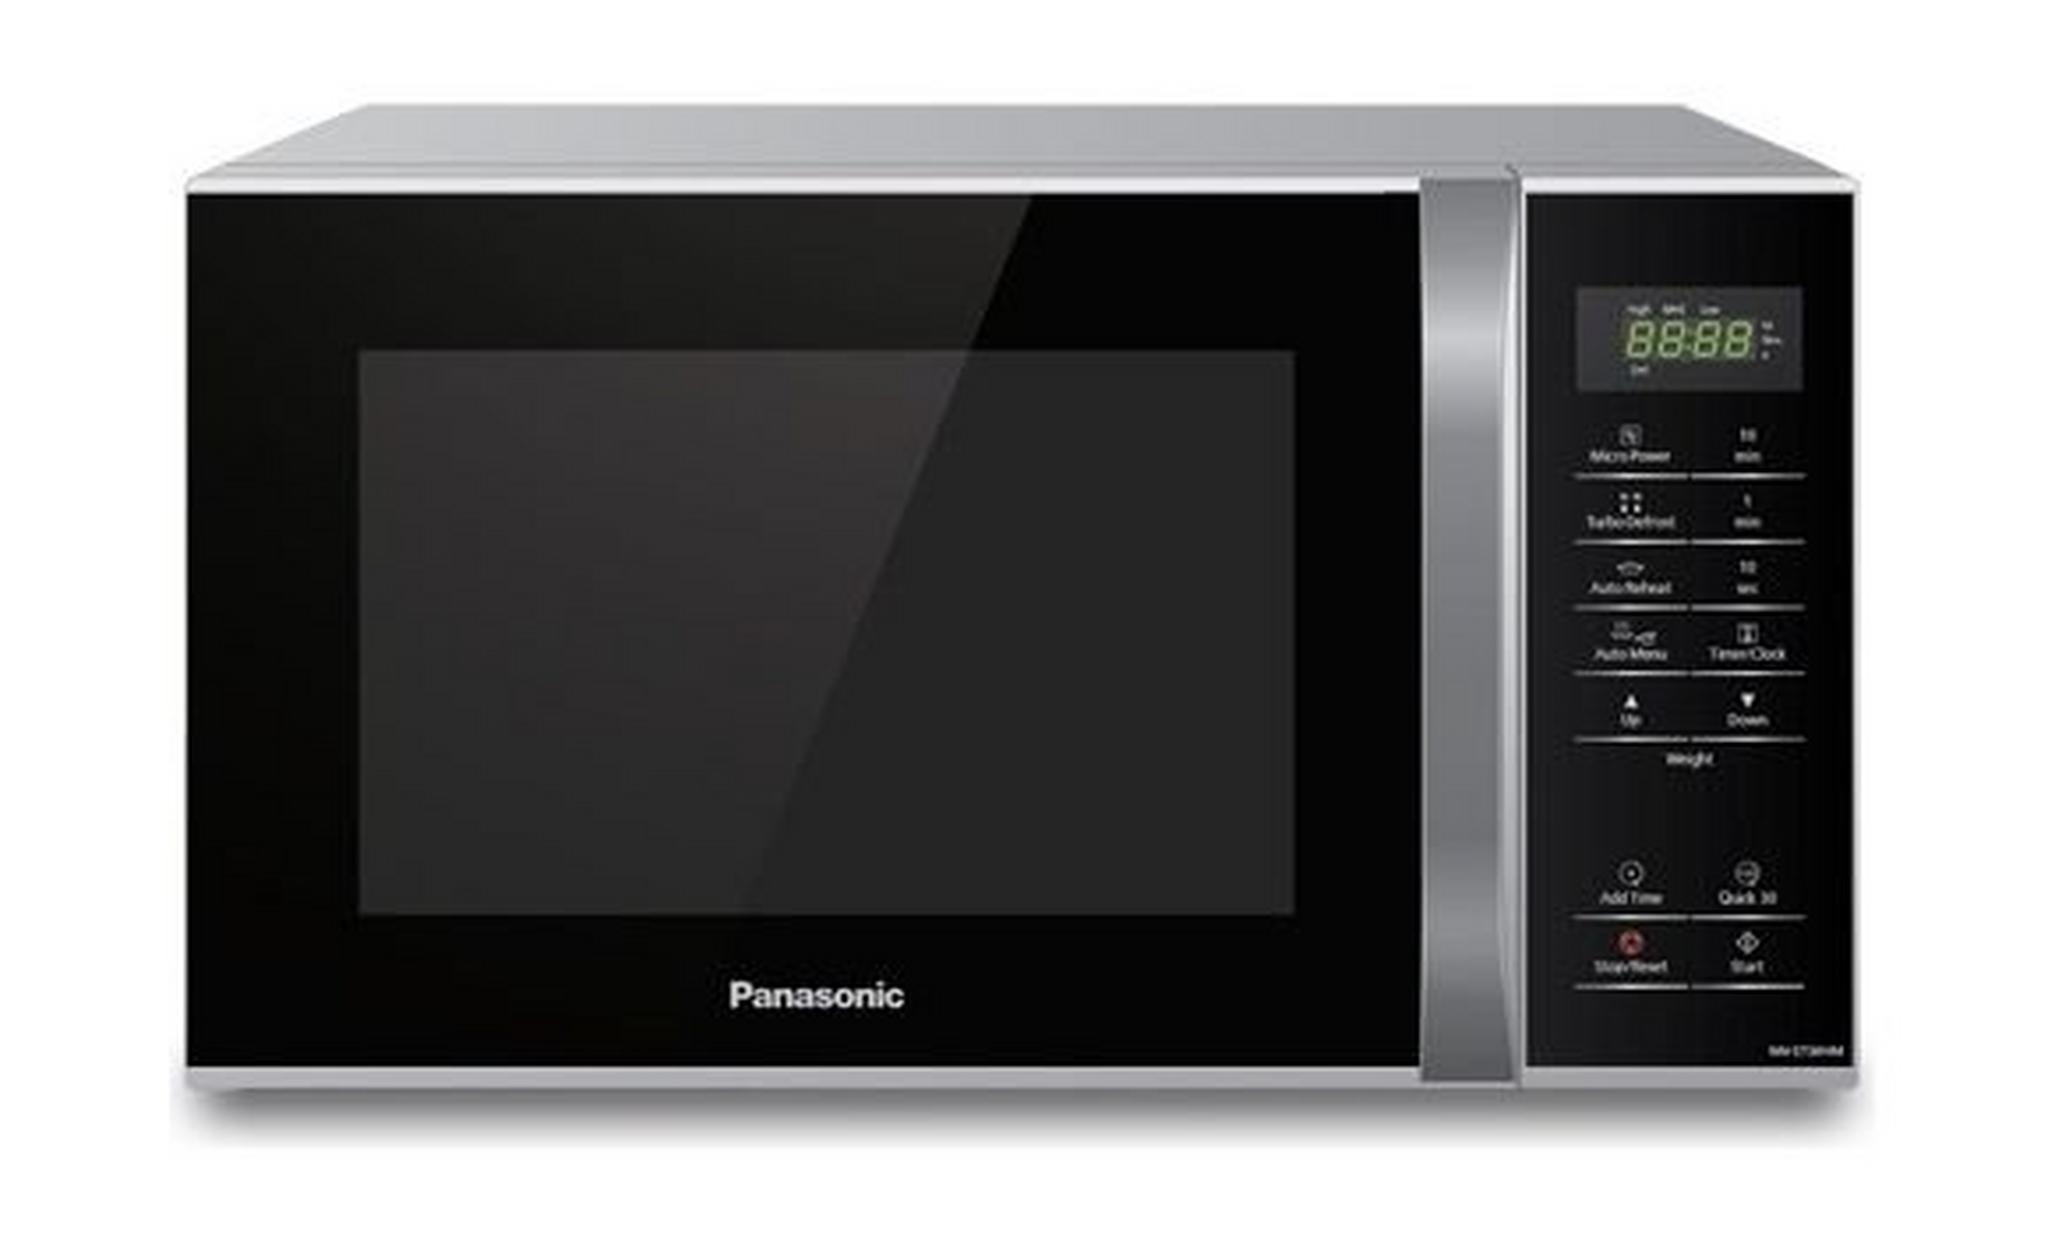 Panasonic 25L - 800W Microwave Oven (NN-ST34)